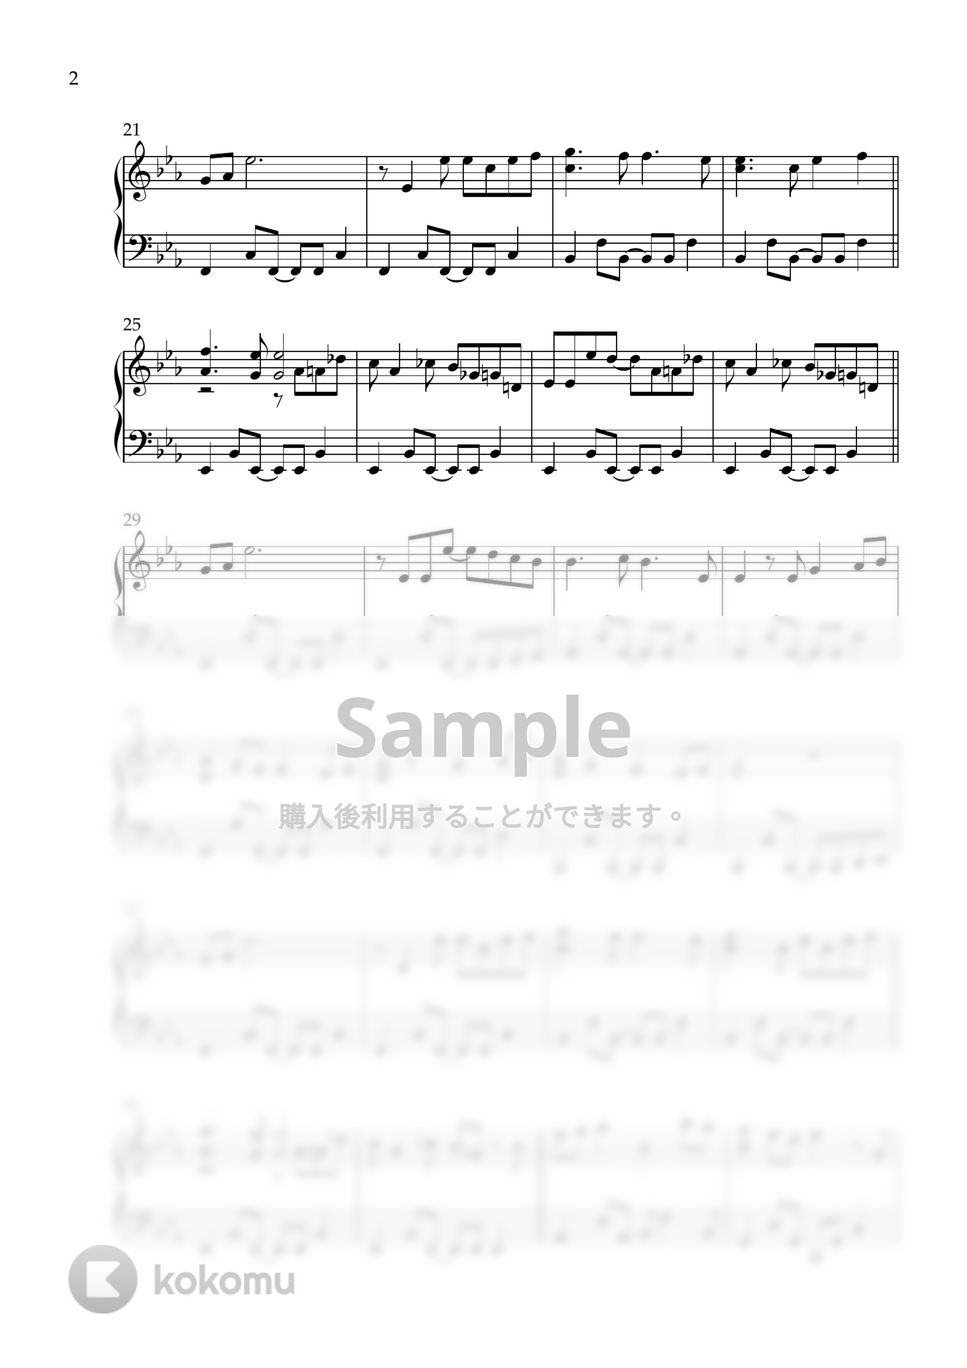 Official髭男dism - ホワイトノイズ by ハルゴナのピアノ部屋